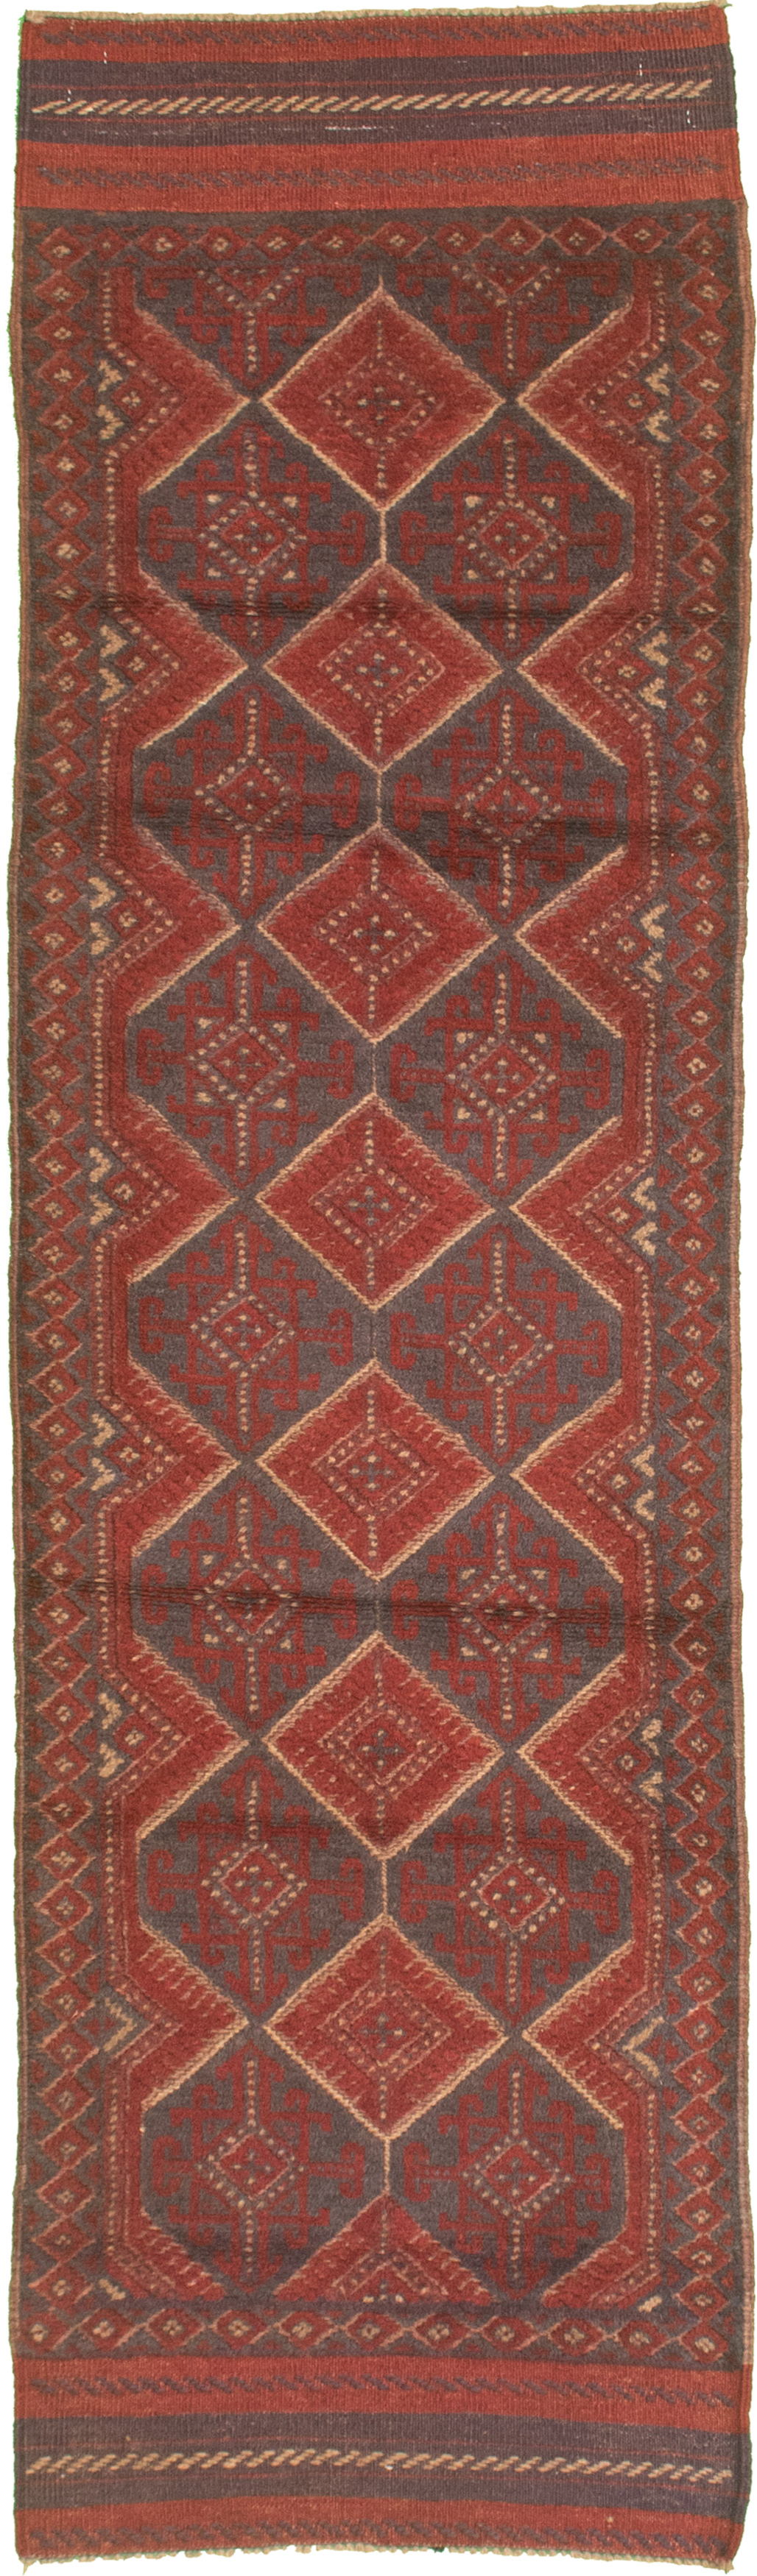 Hand-knotted Tajik Caucasian Dark Navy Wool Rug 2'0" x 8'2"  Size: 2'0" x 8'2"  